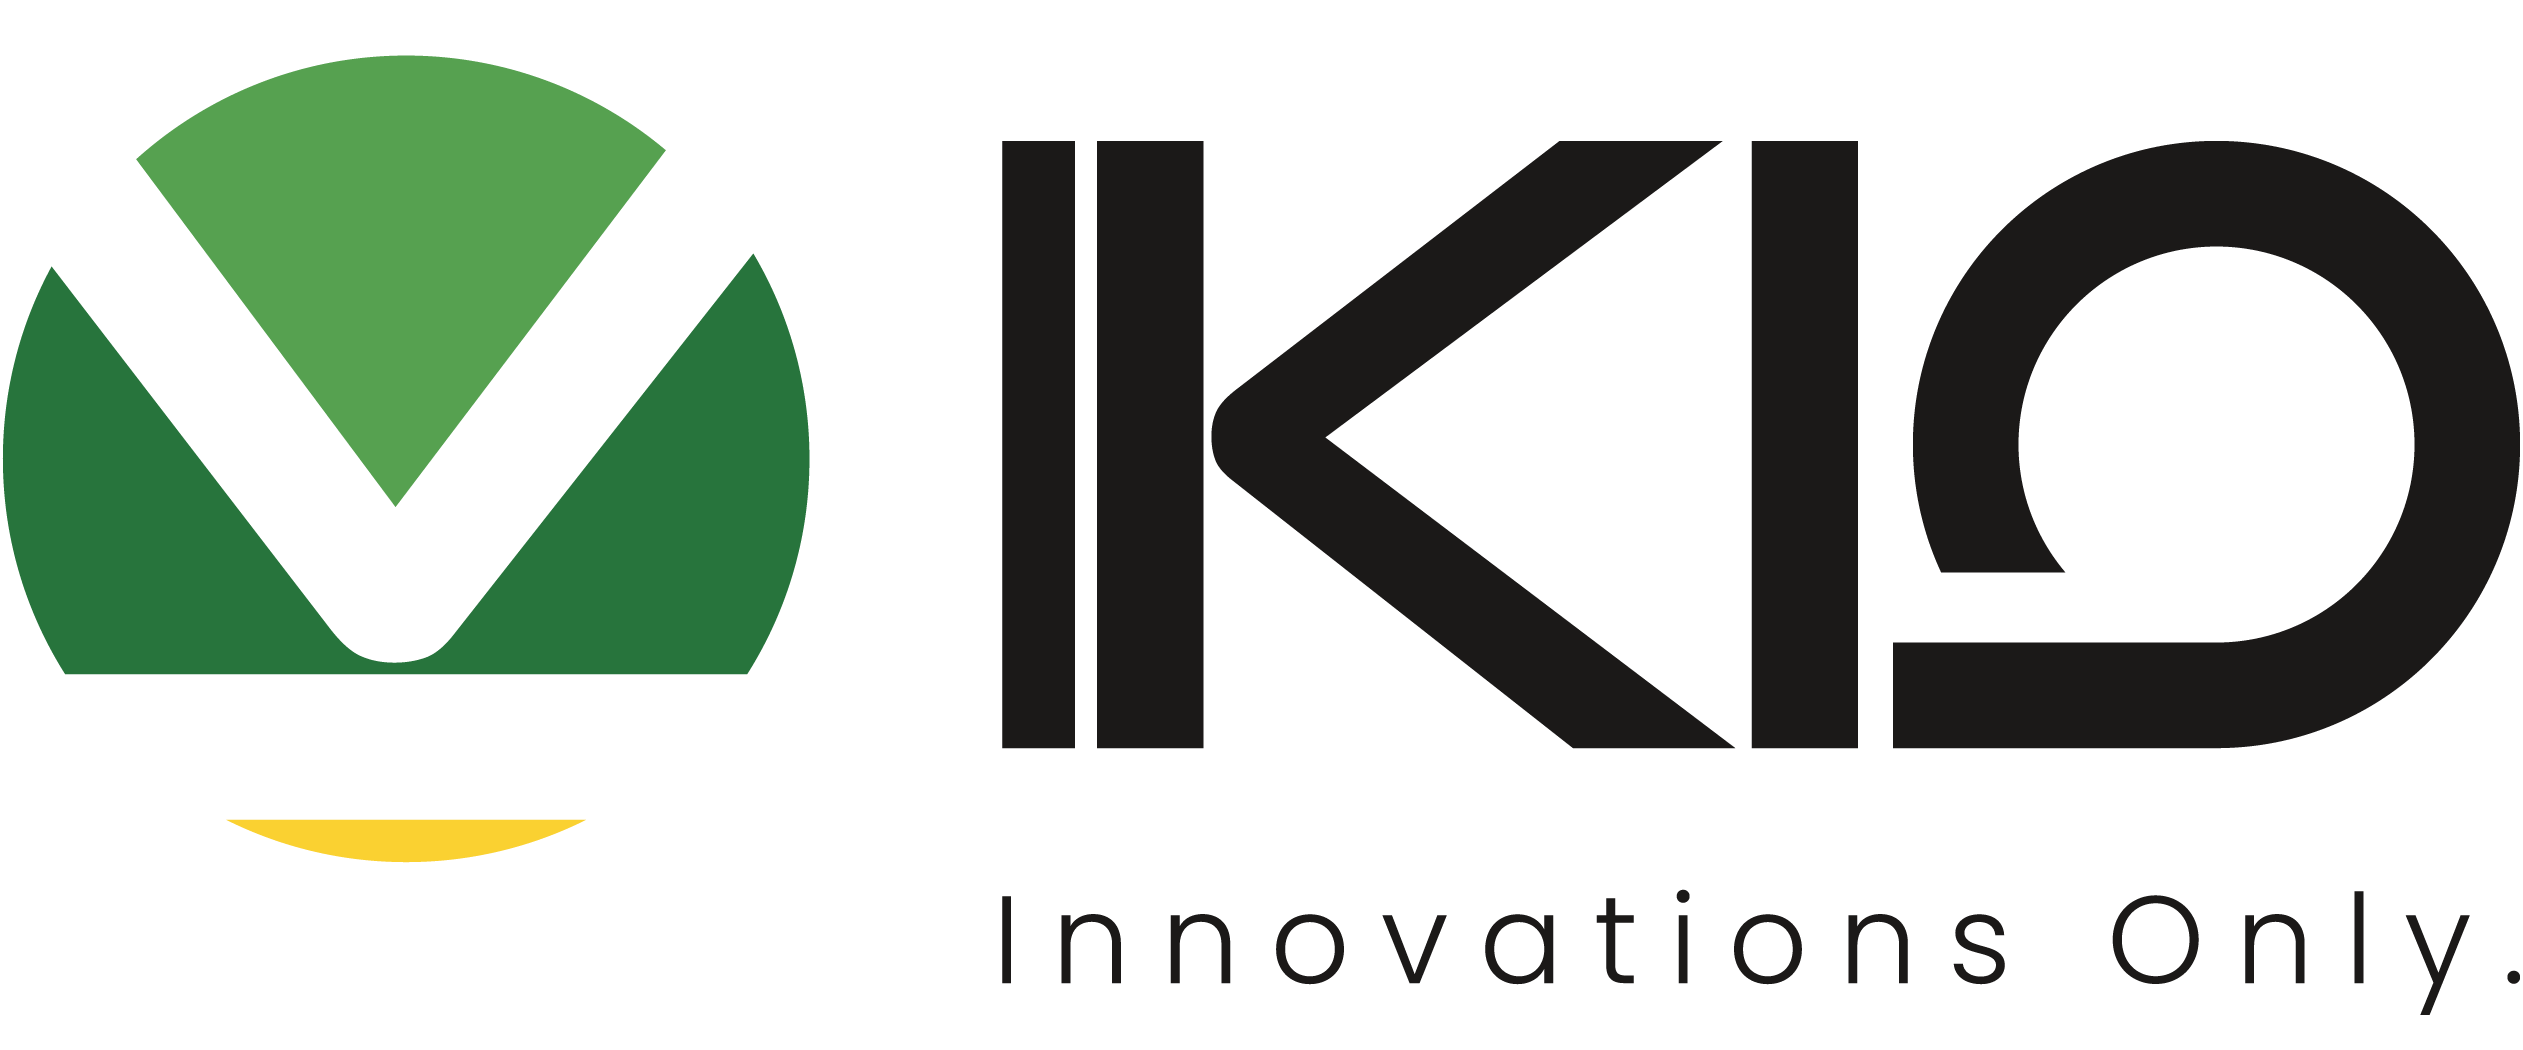 IKIO Lighting IPO recommendations